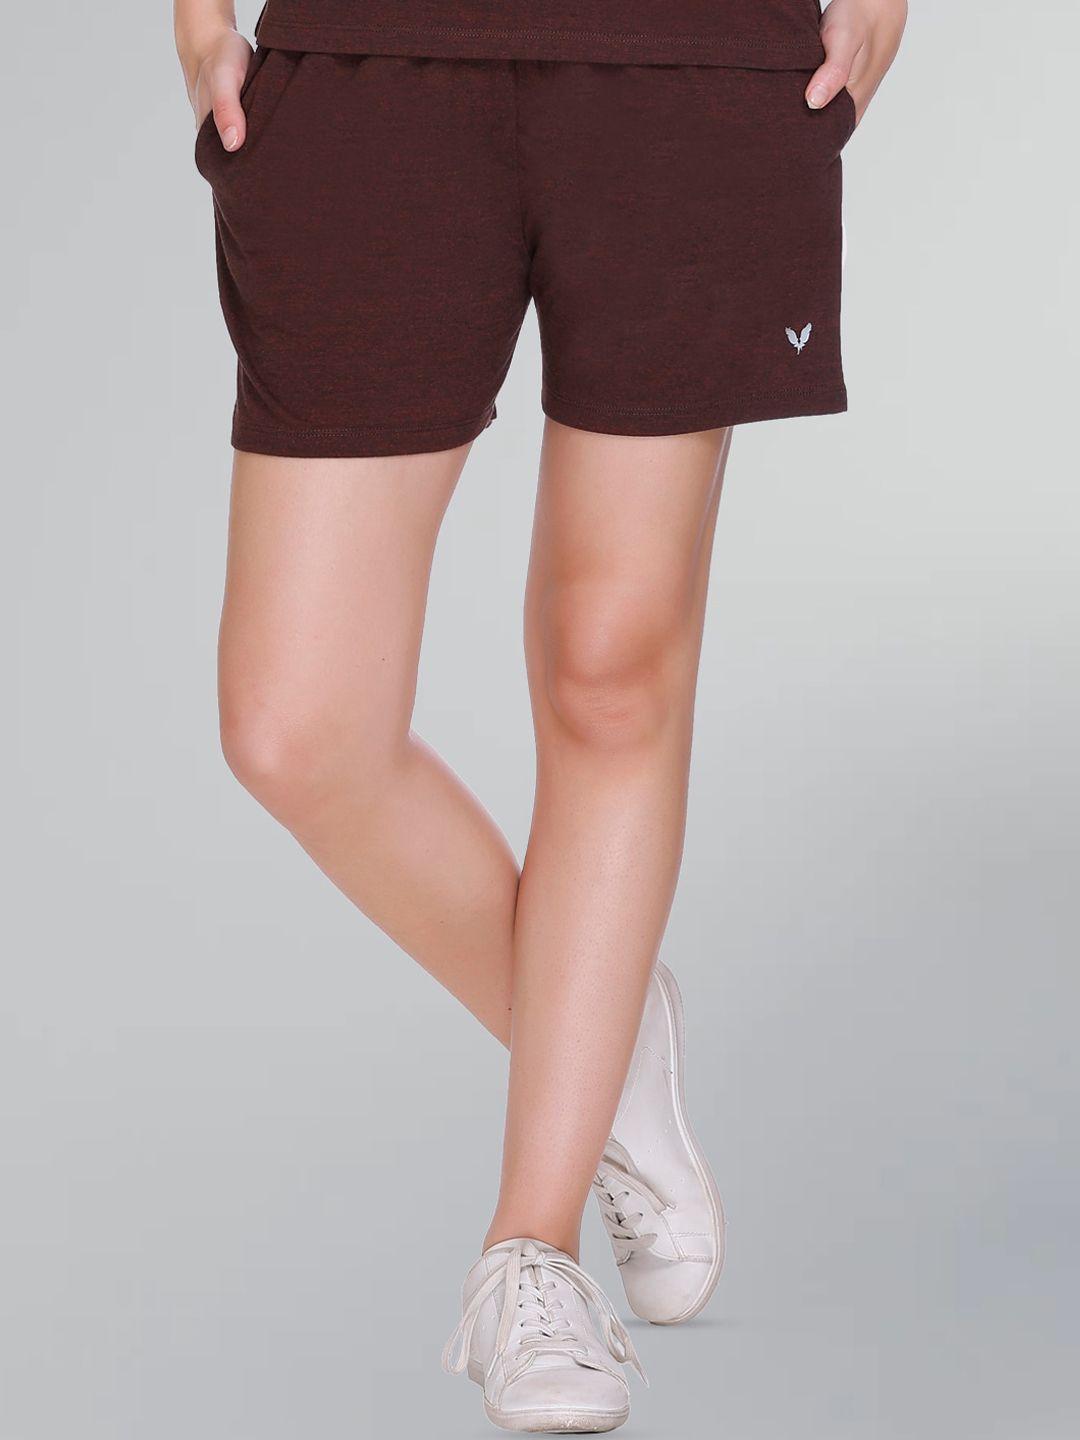 godfrey-women-cotton-regular-shorts